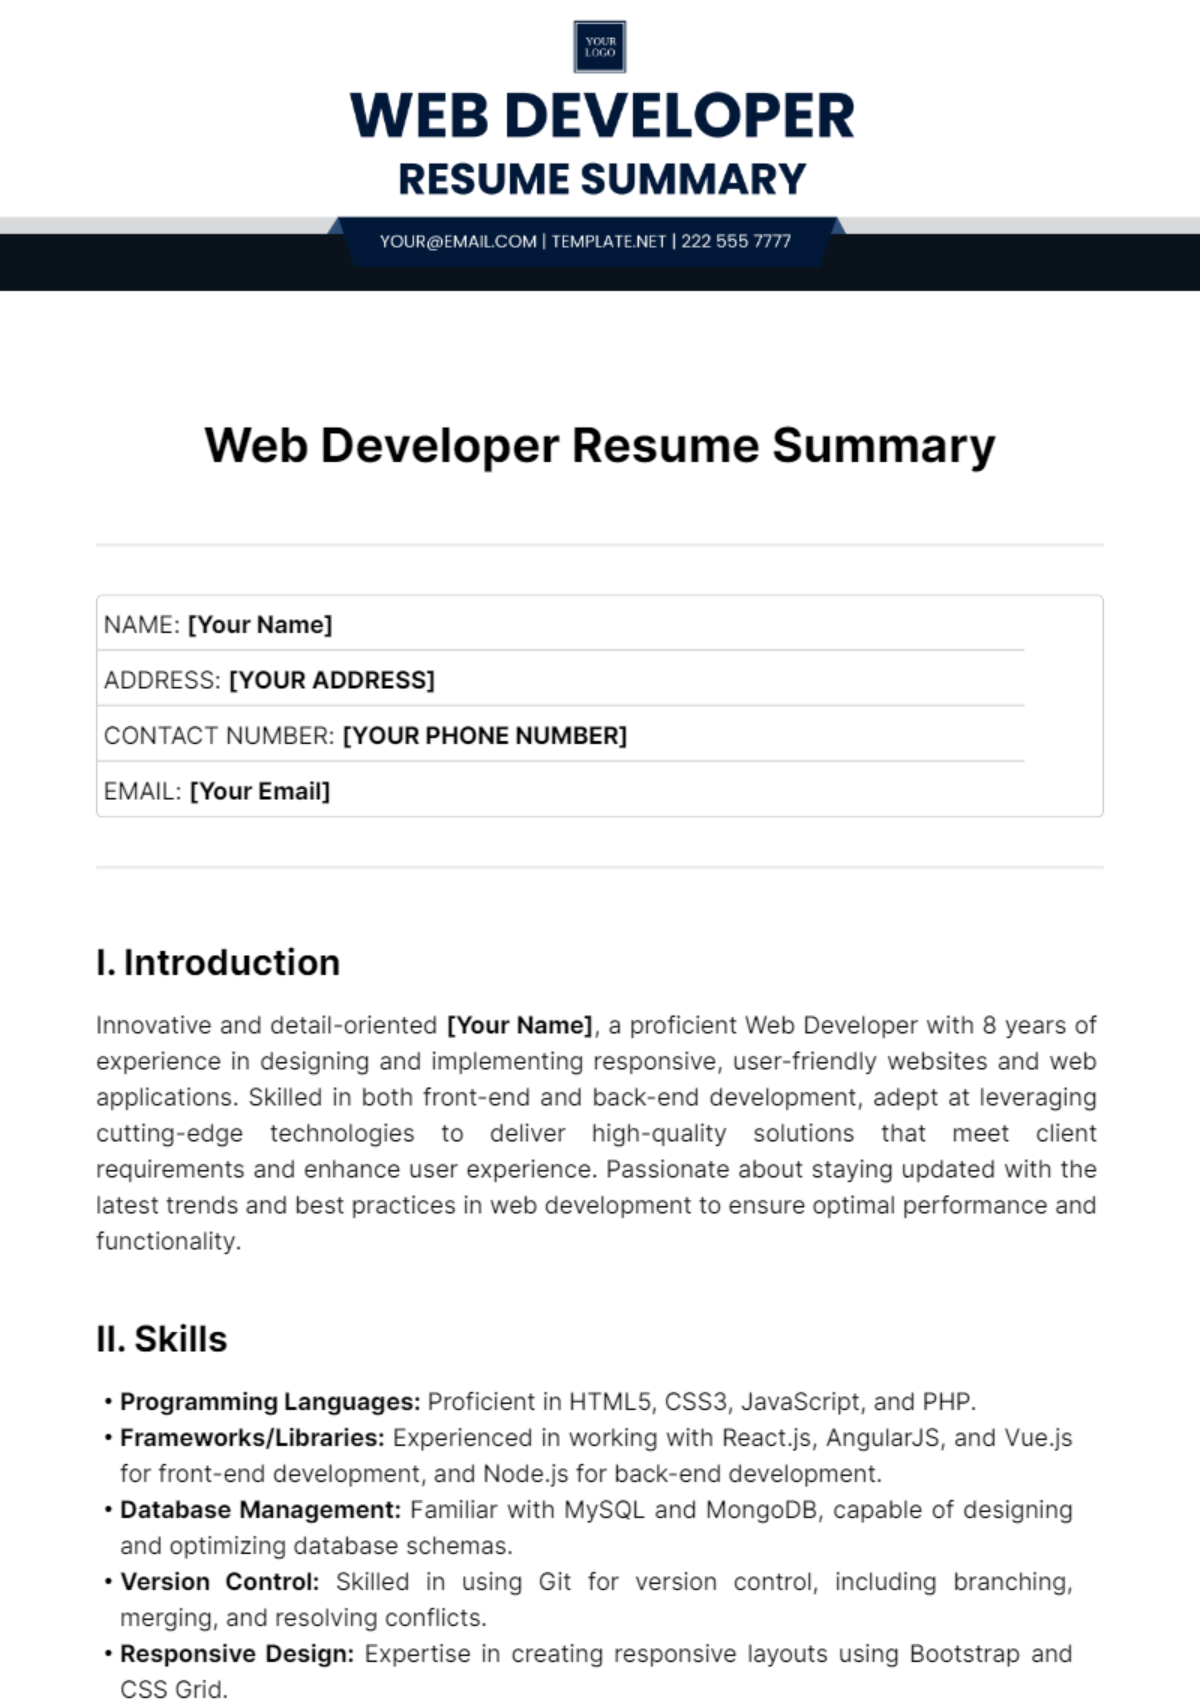 Web Developer Resume Summary Template